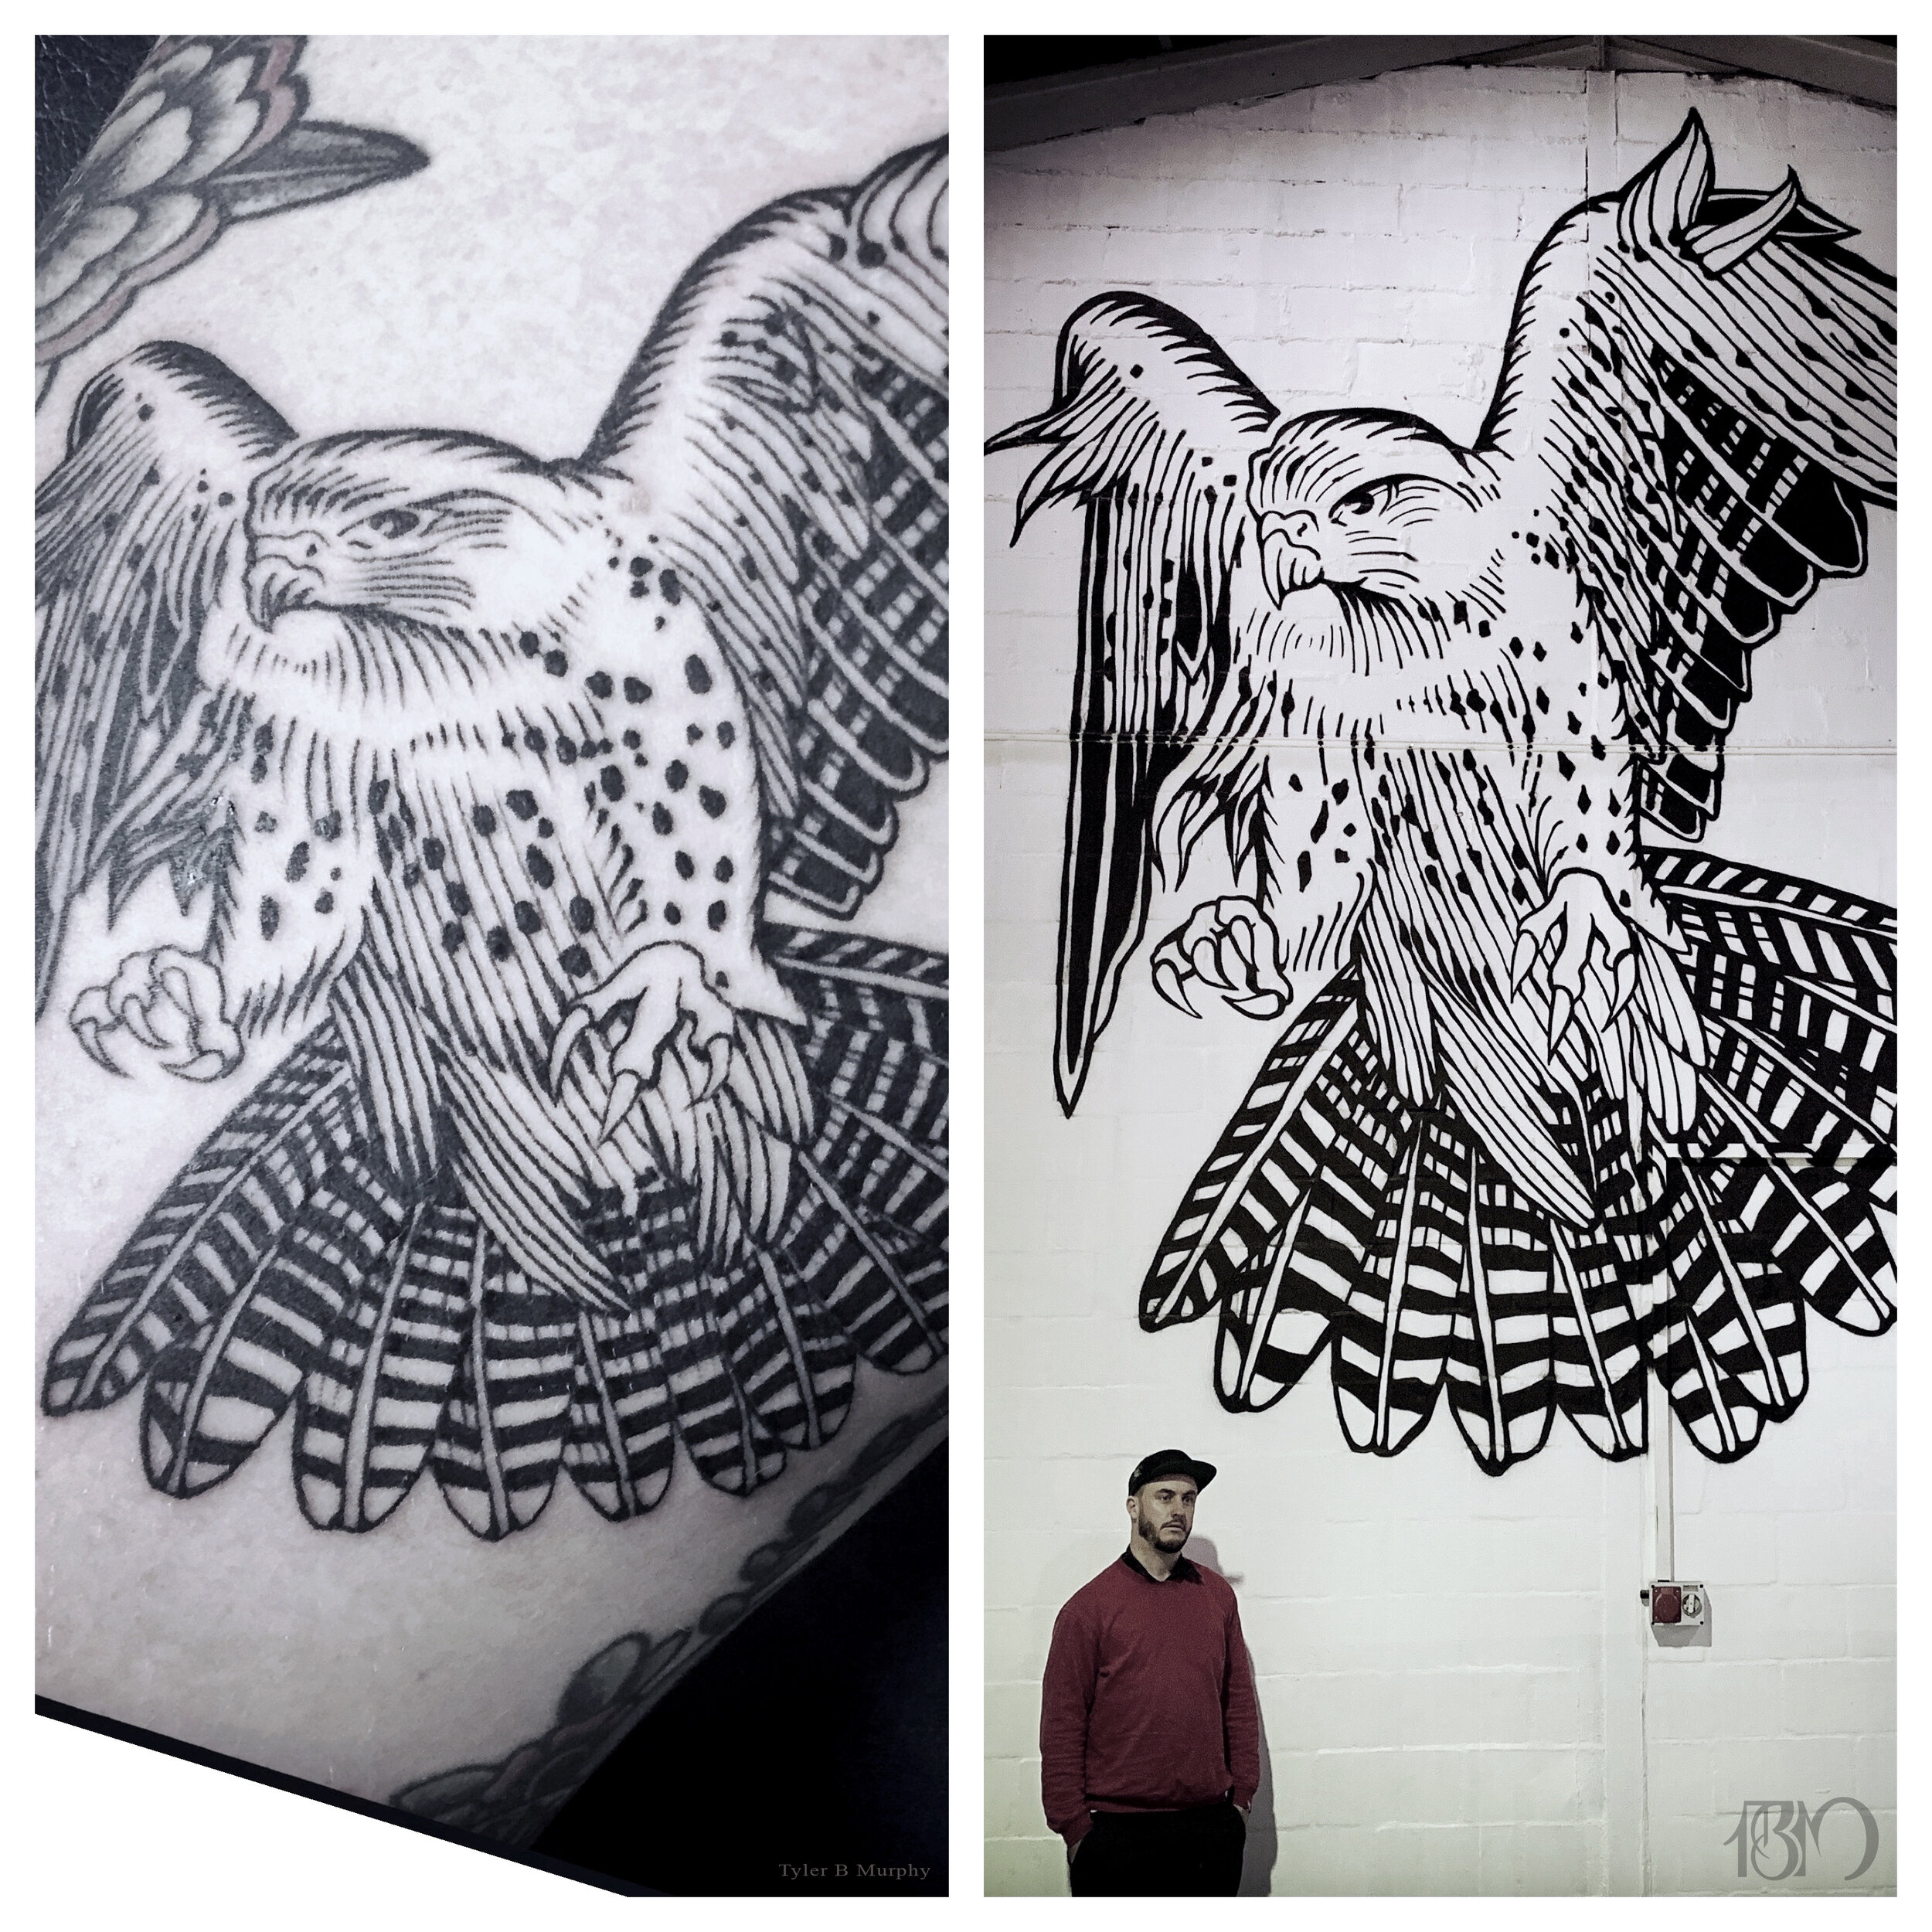 11a -Falcon tattoo and mural Tyler B Murphy copy.jpg